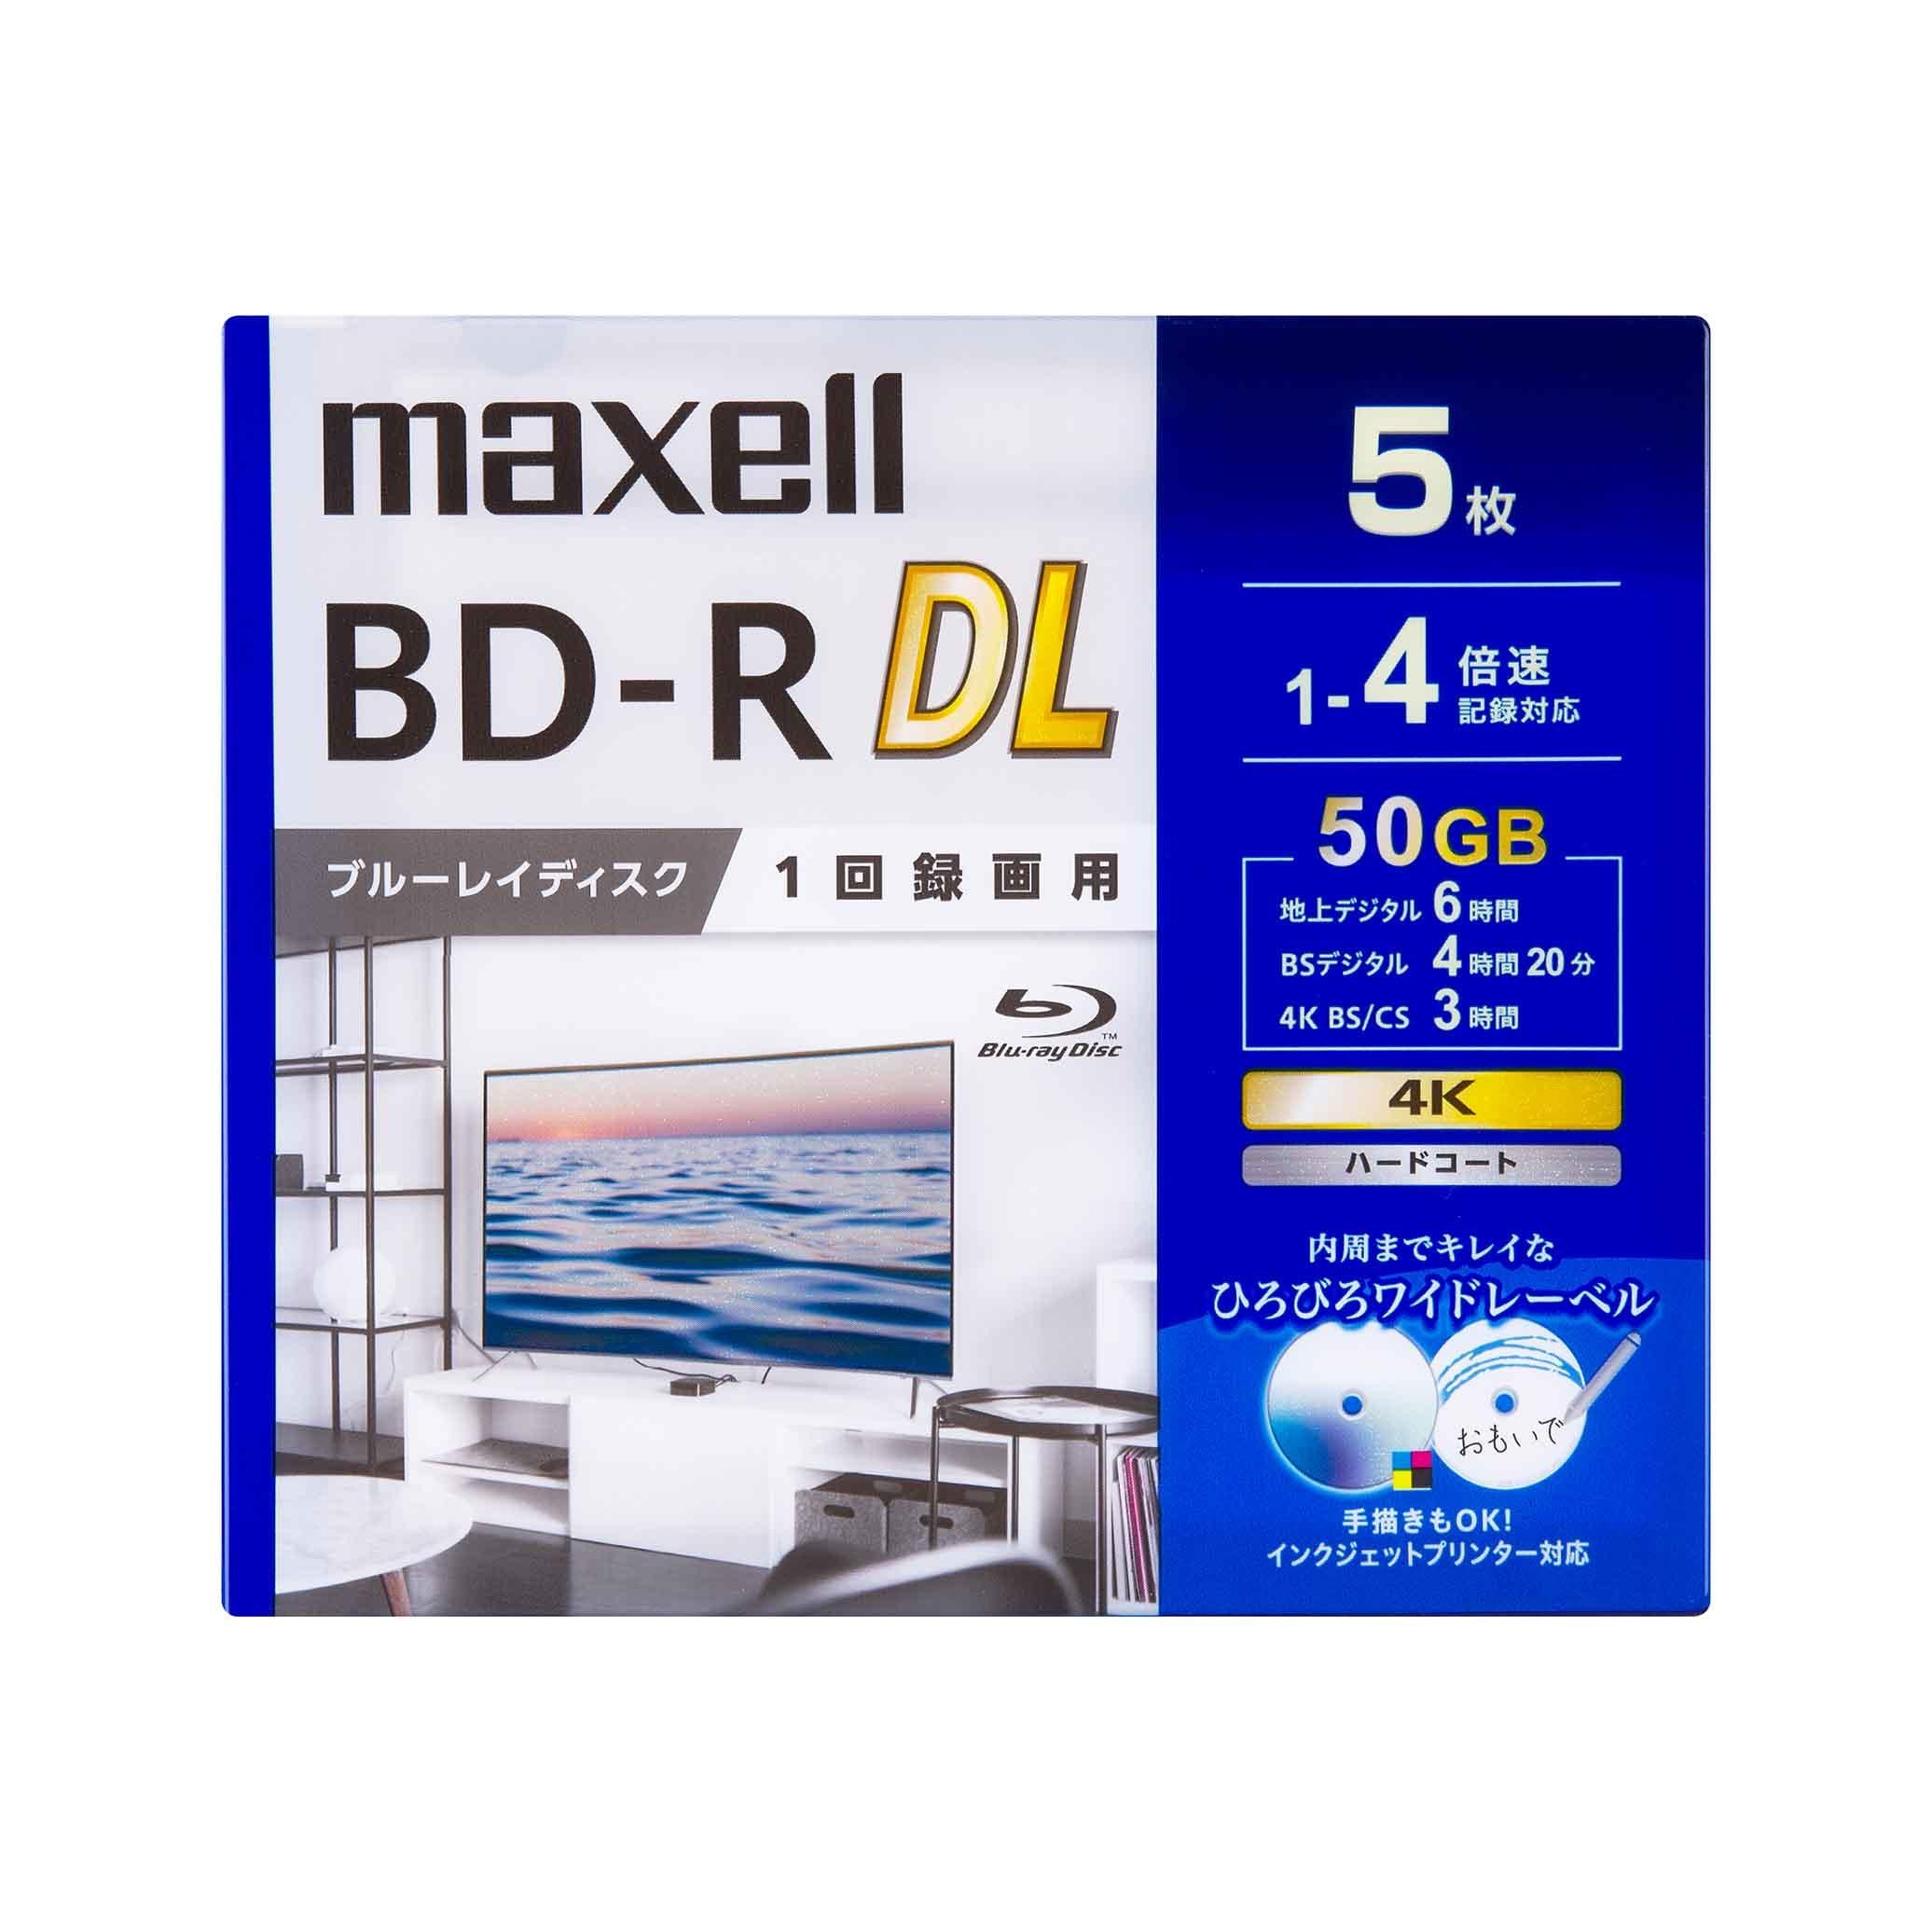 maxell 録画用BD-R DL 2層 1回録画用 地上デジタル360分 BSデジタル260